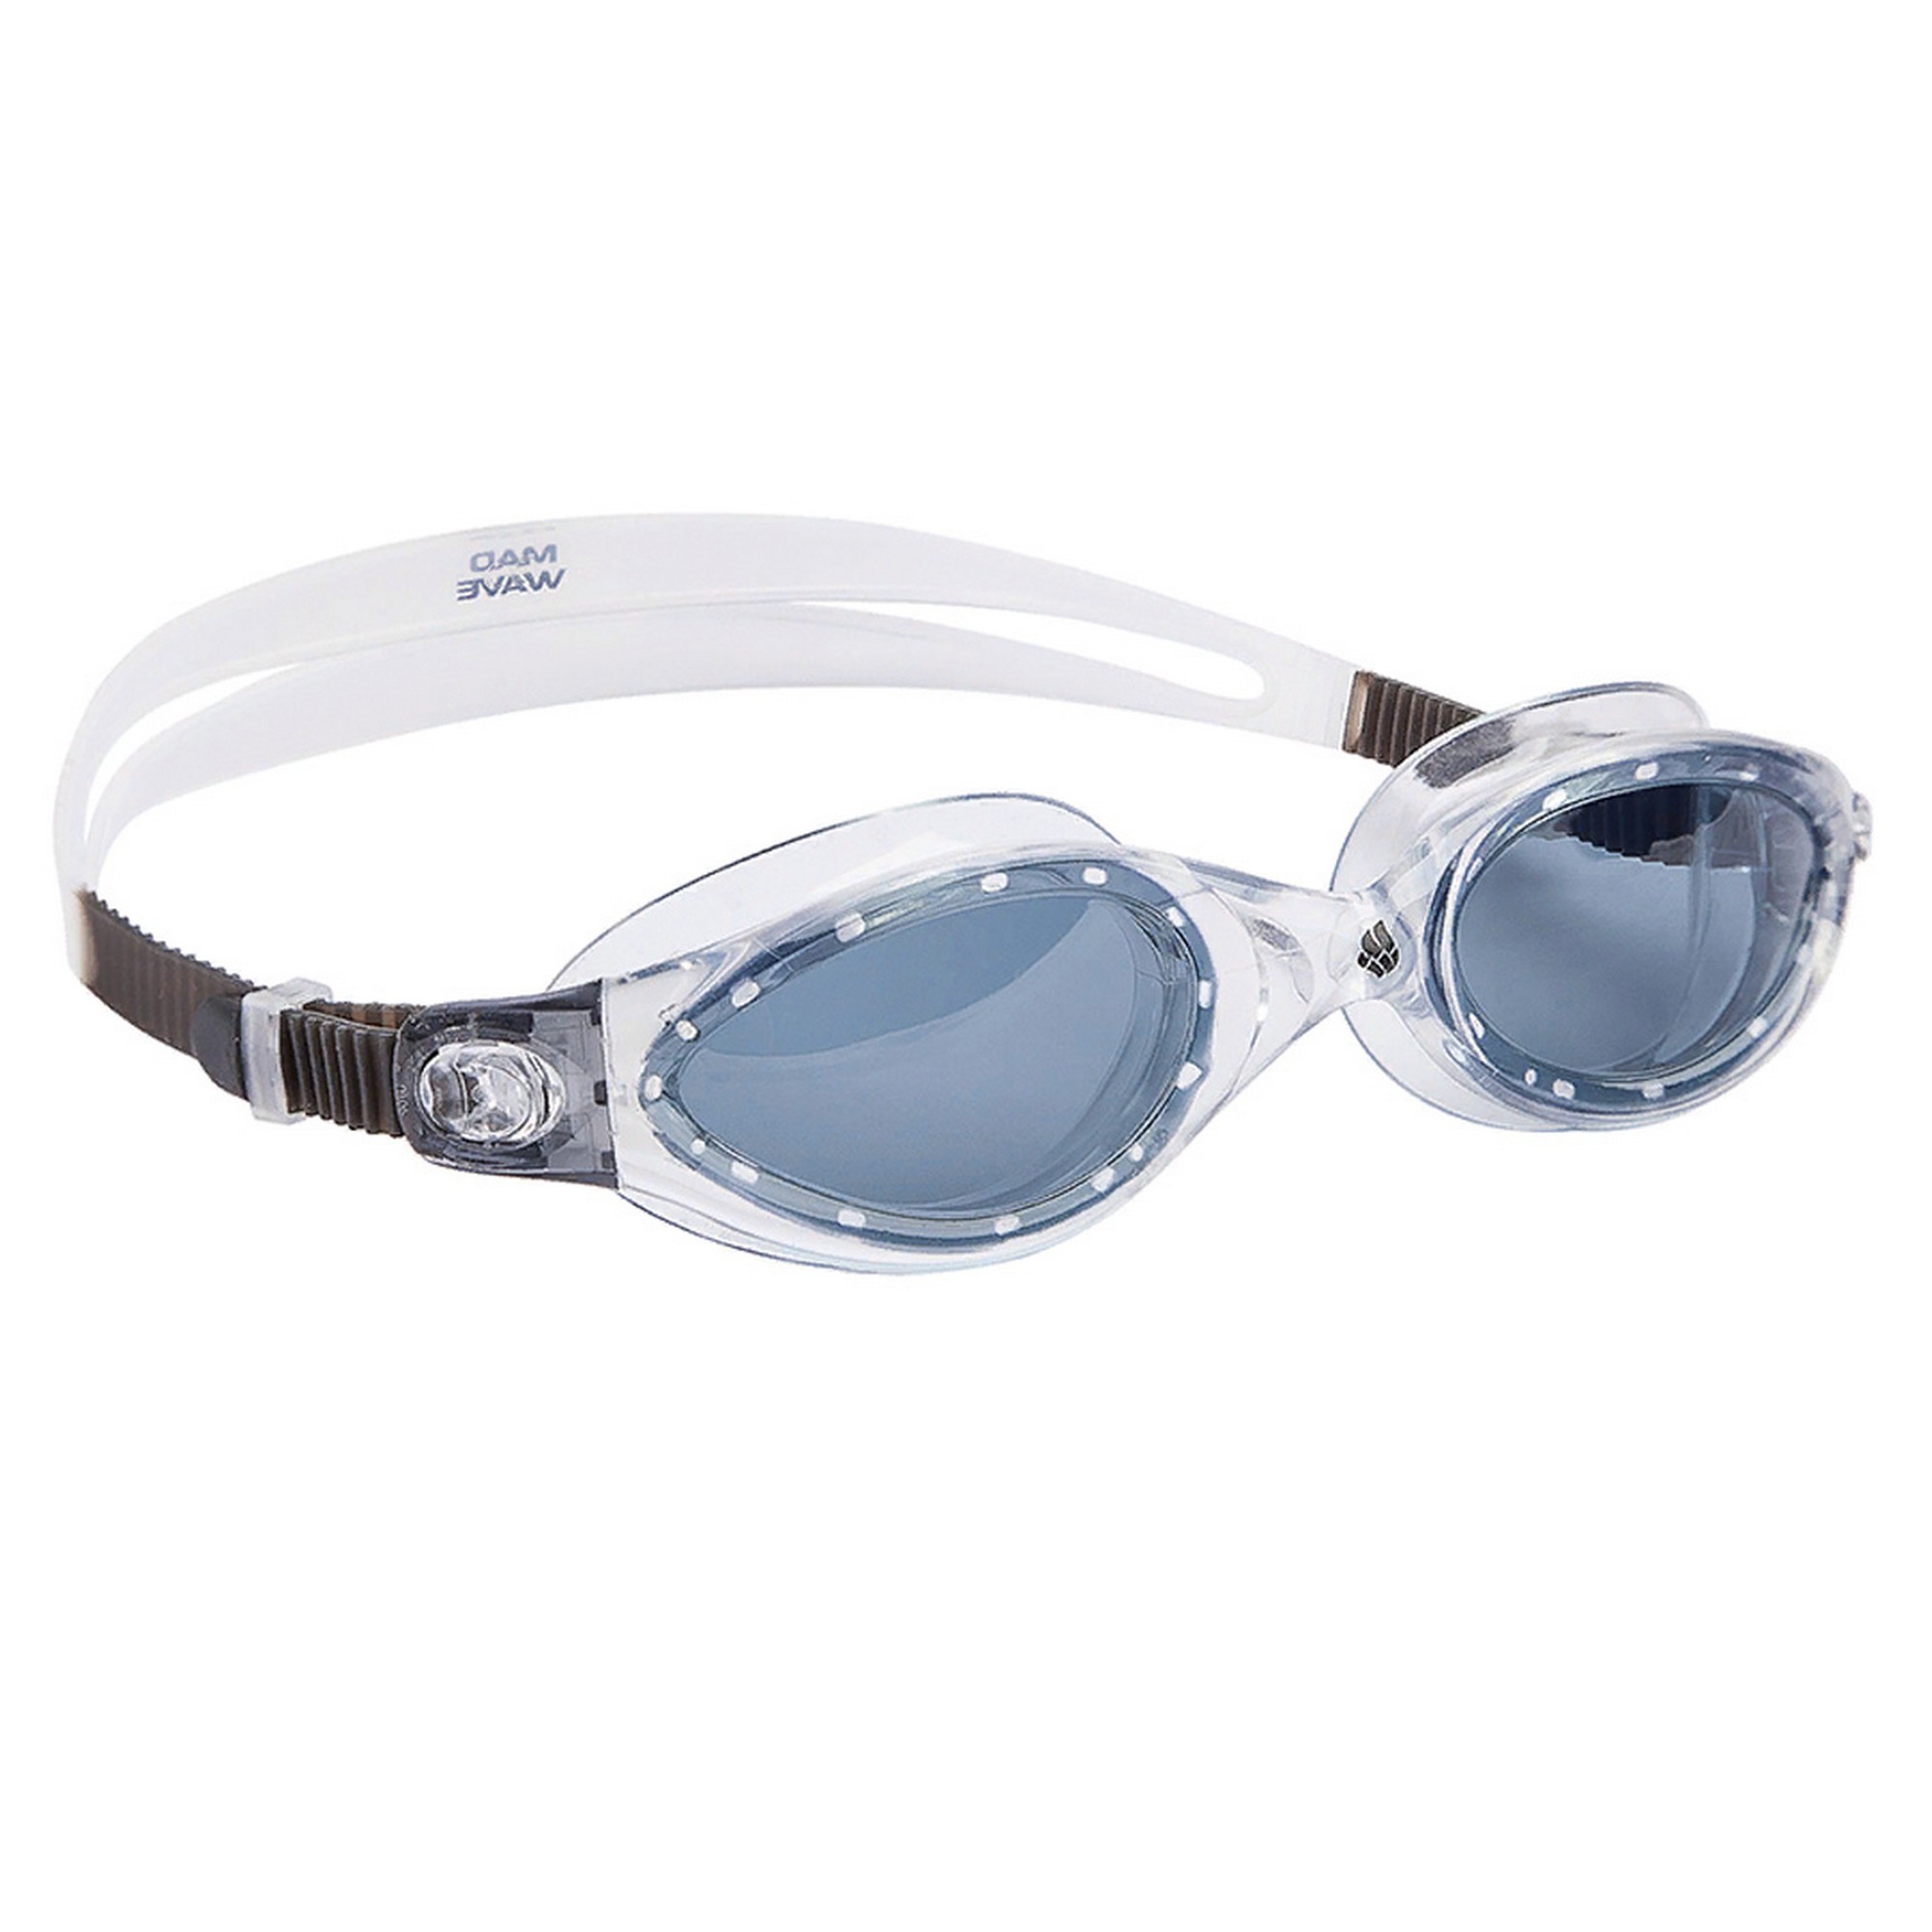 Очки для плавания Mad Wave Clear Vision CP Lens M0431 06 0 17W,  - купить со скидкой